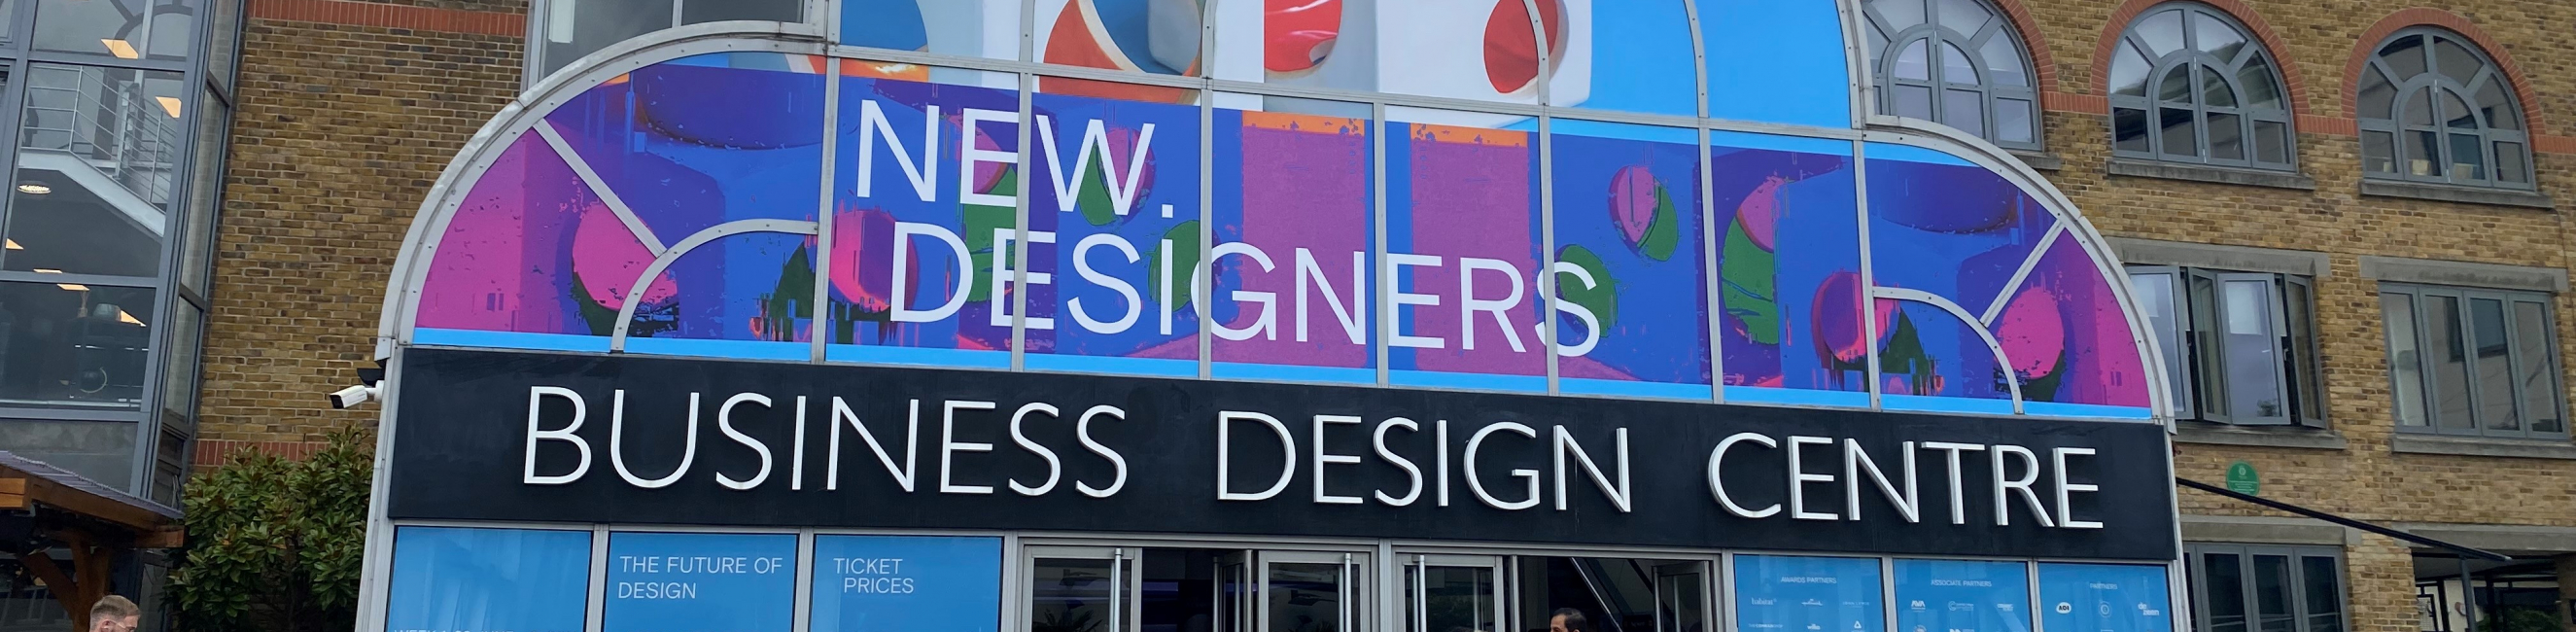 New Designer's Business Design Centre building